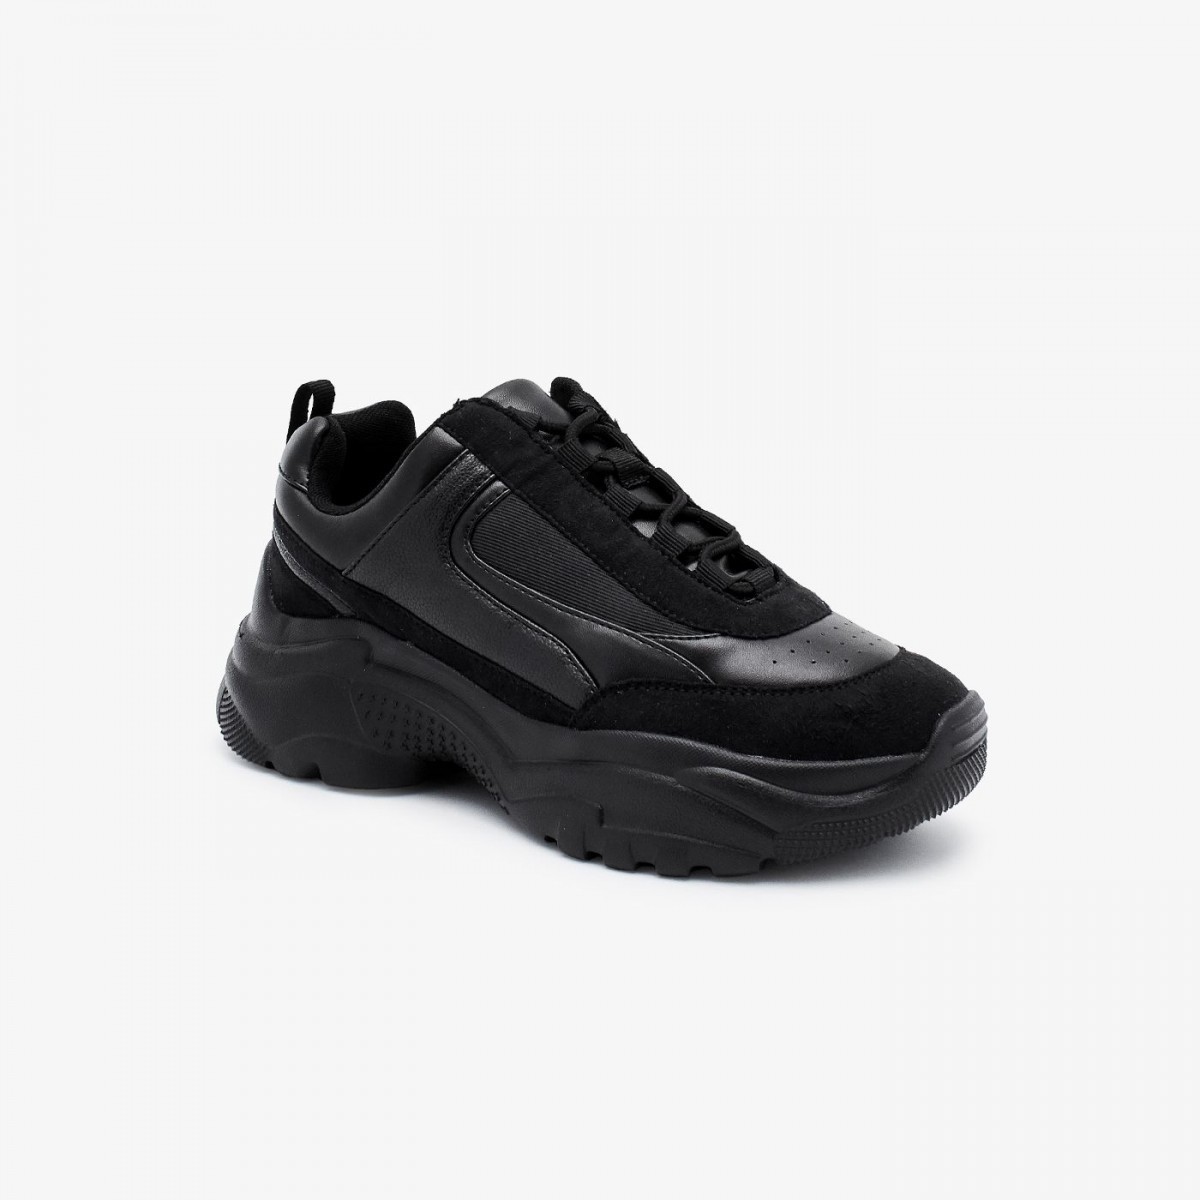 /2019/08/reeva-women-casual-sneakers-rv-sm-0448-black-image1.jpeg